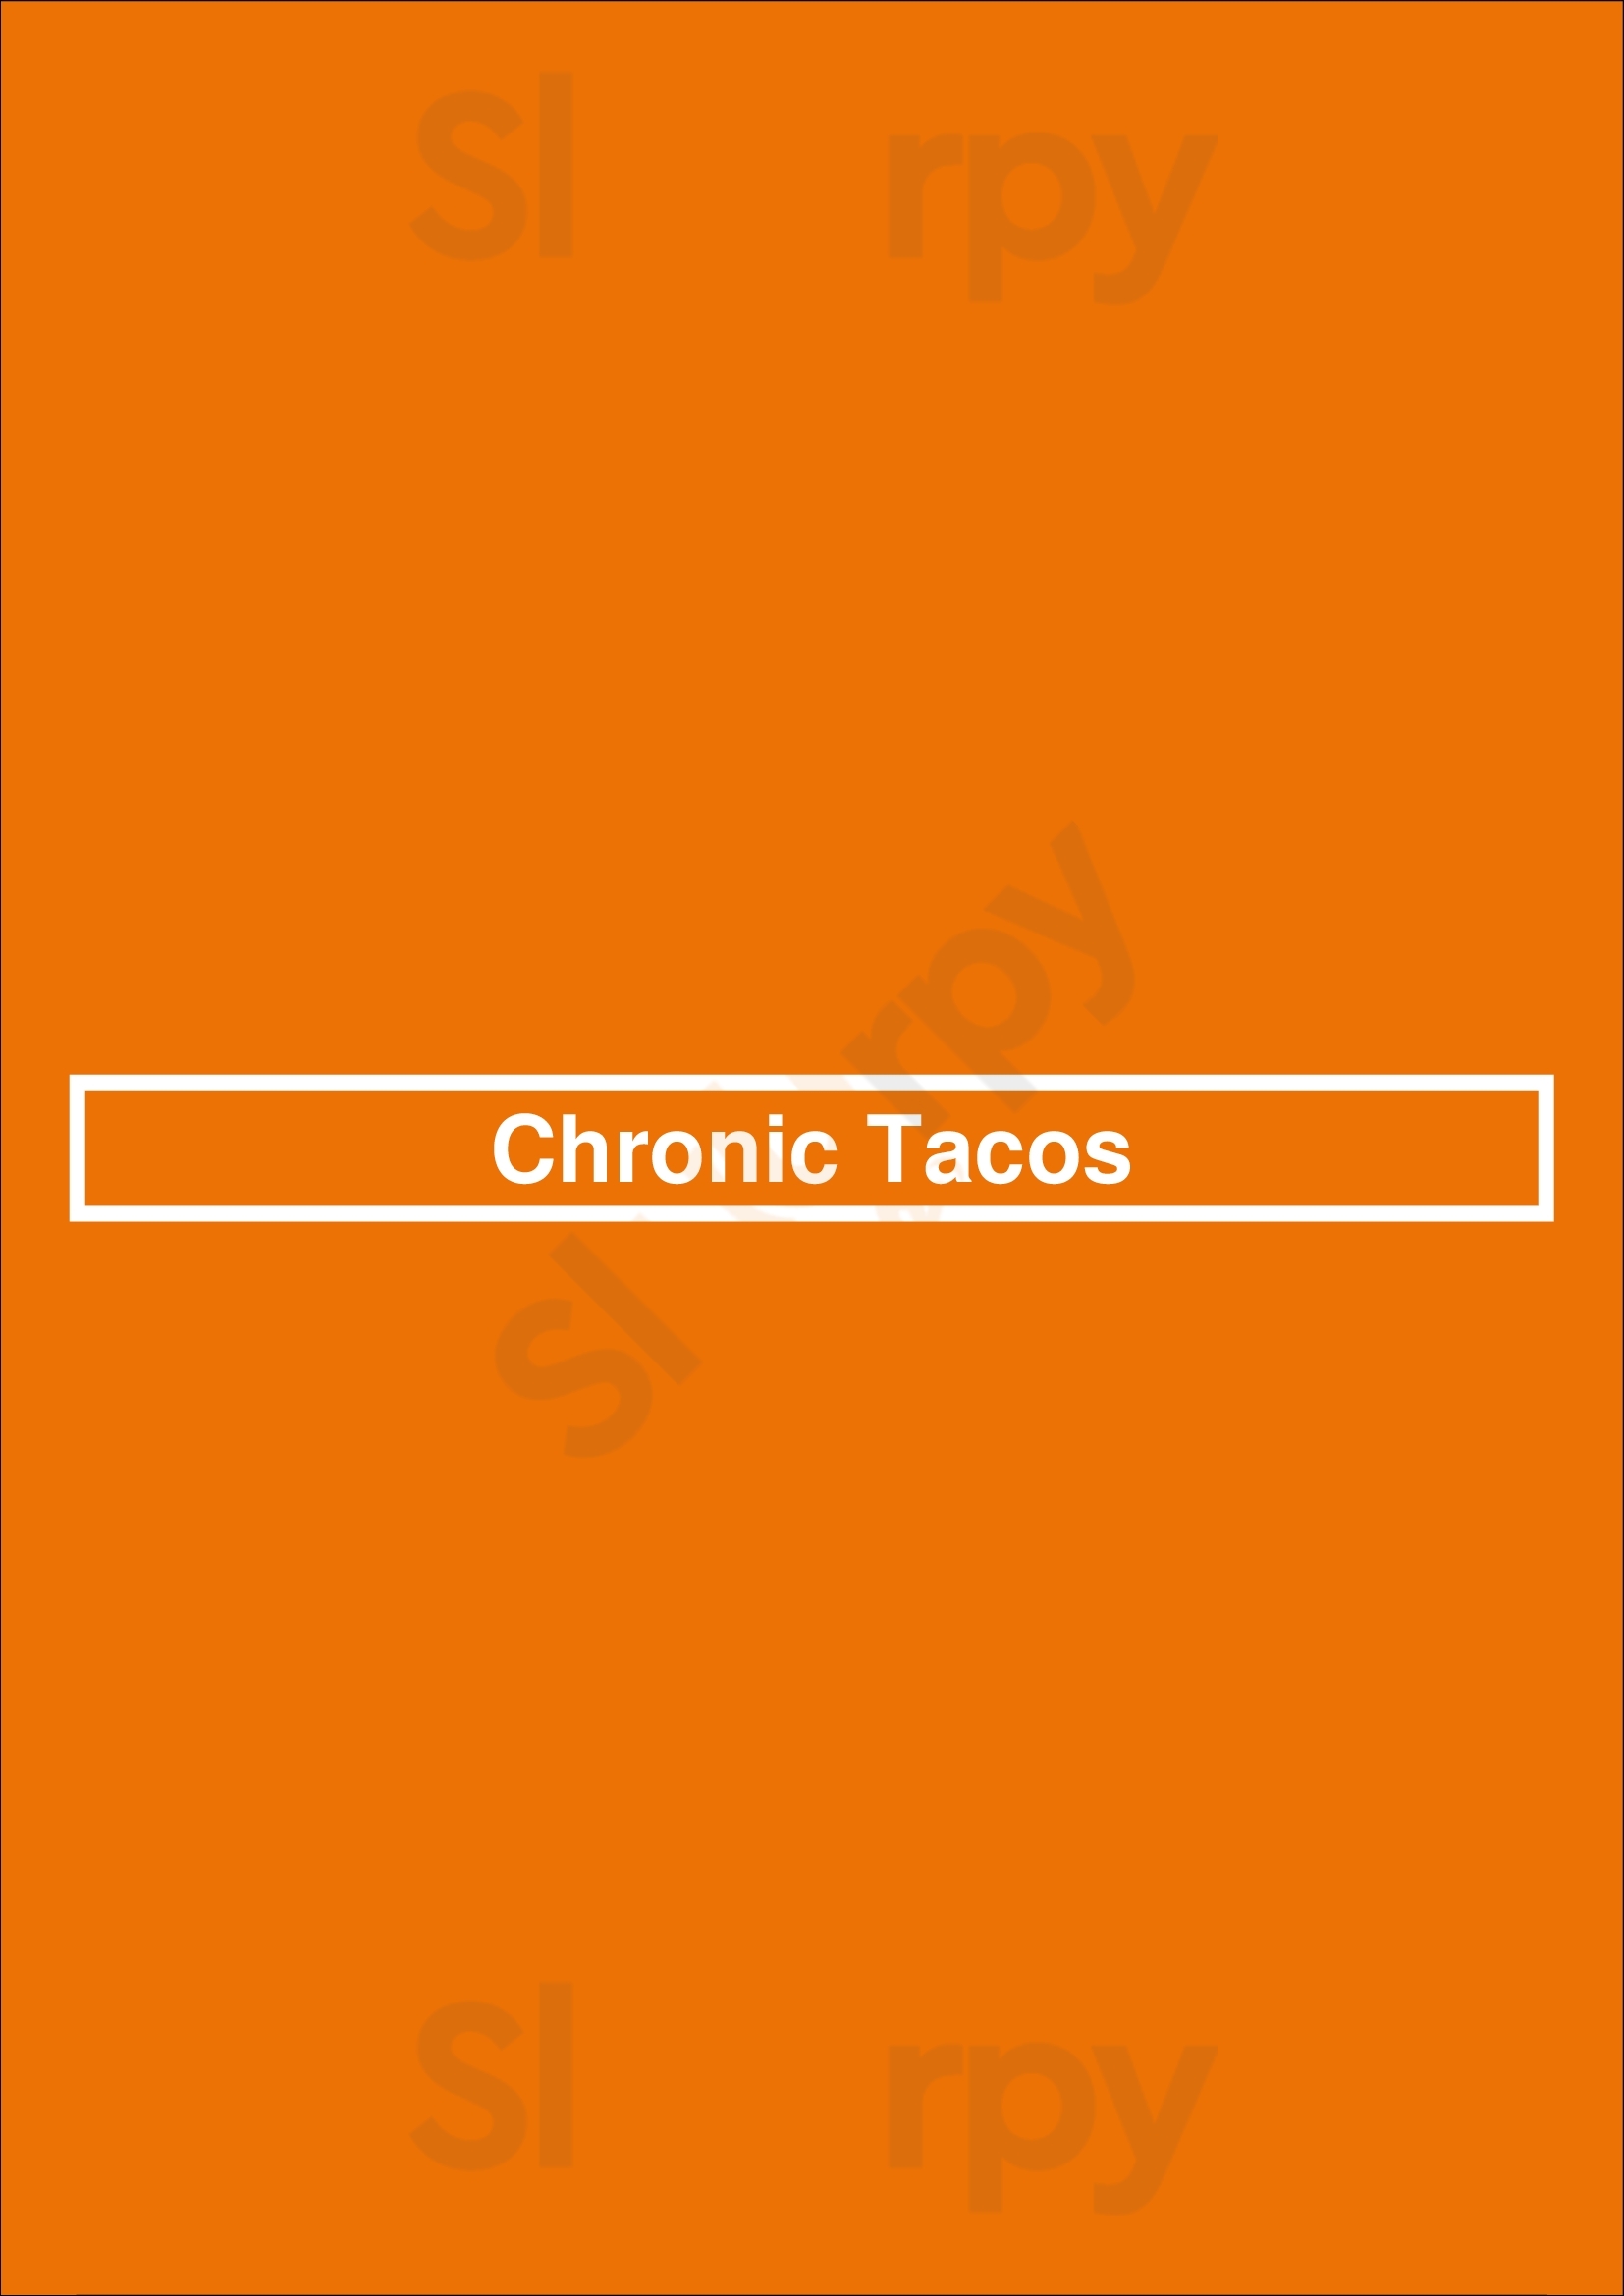 Chronic Tacos Honolulu Menu - 1